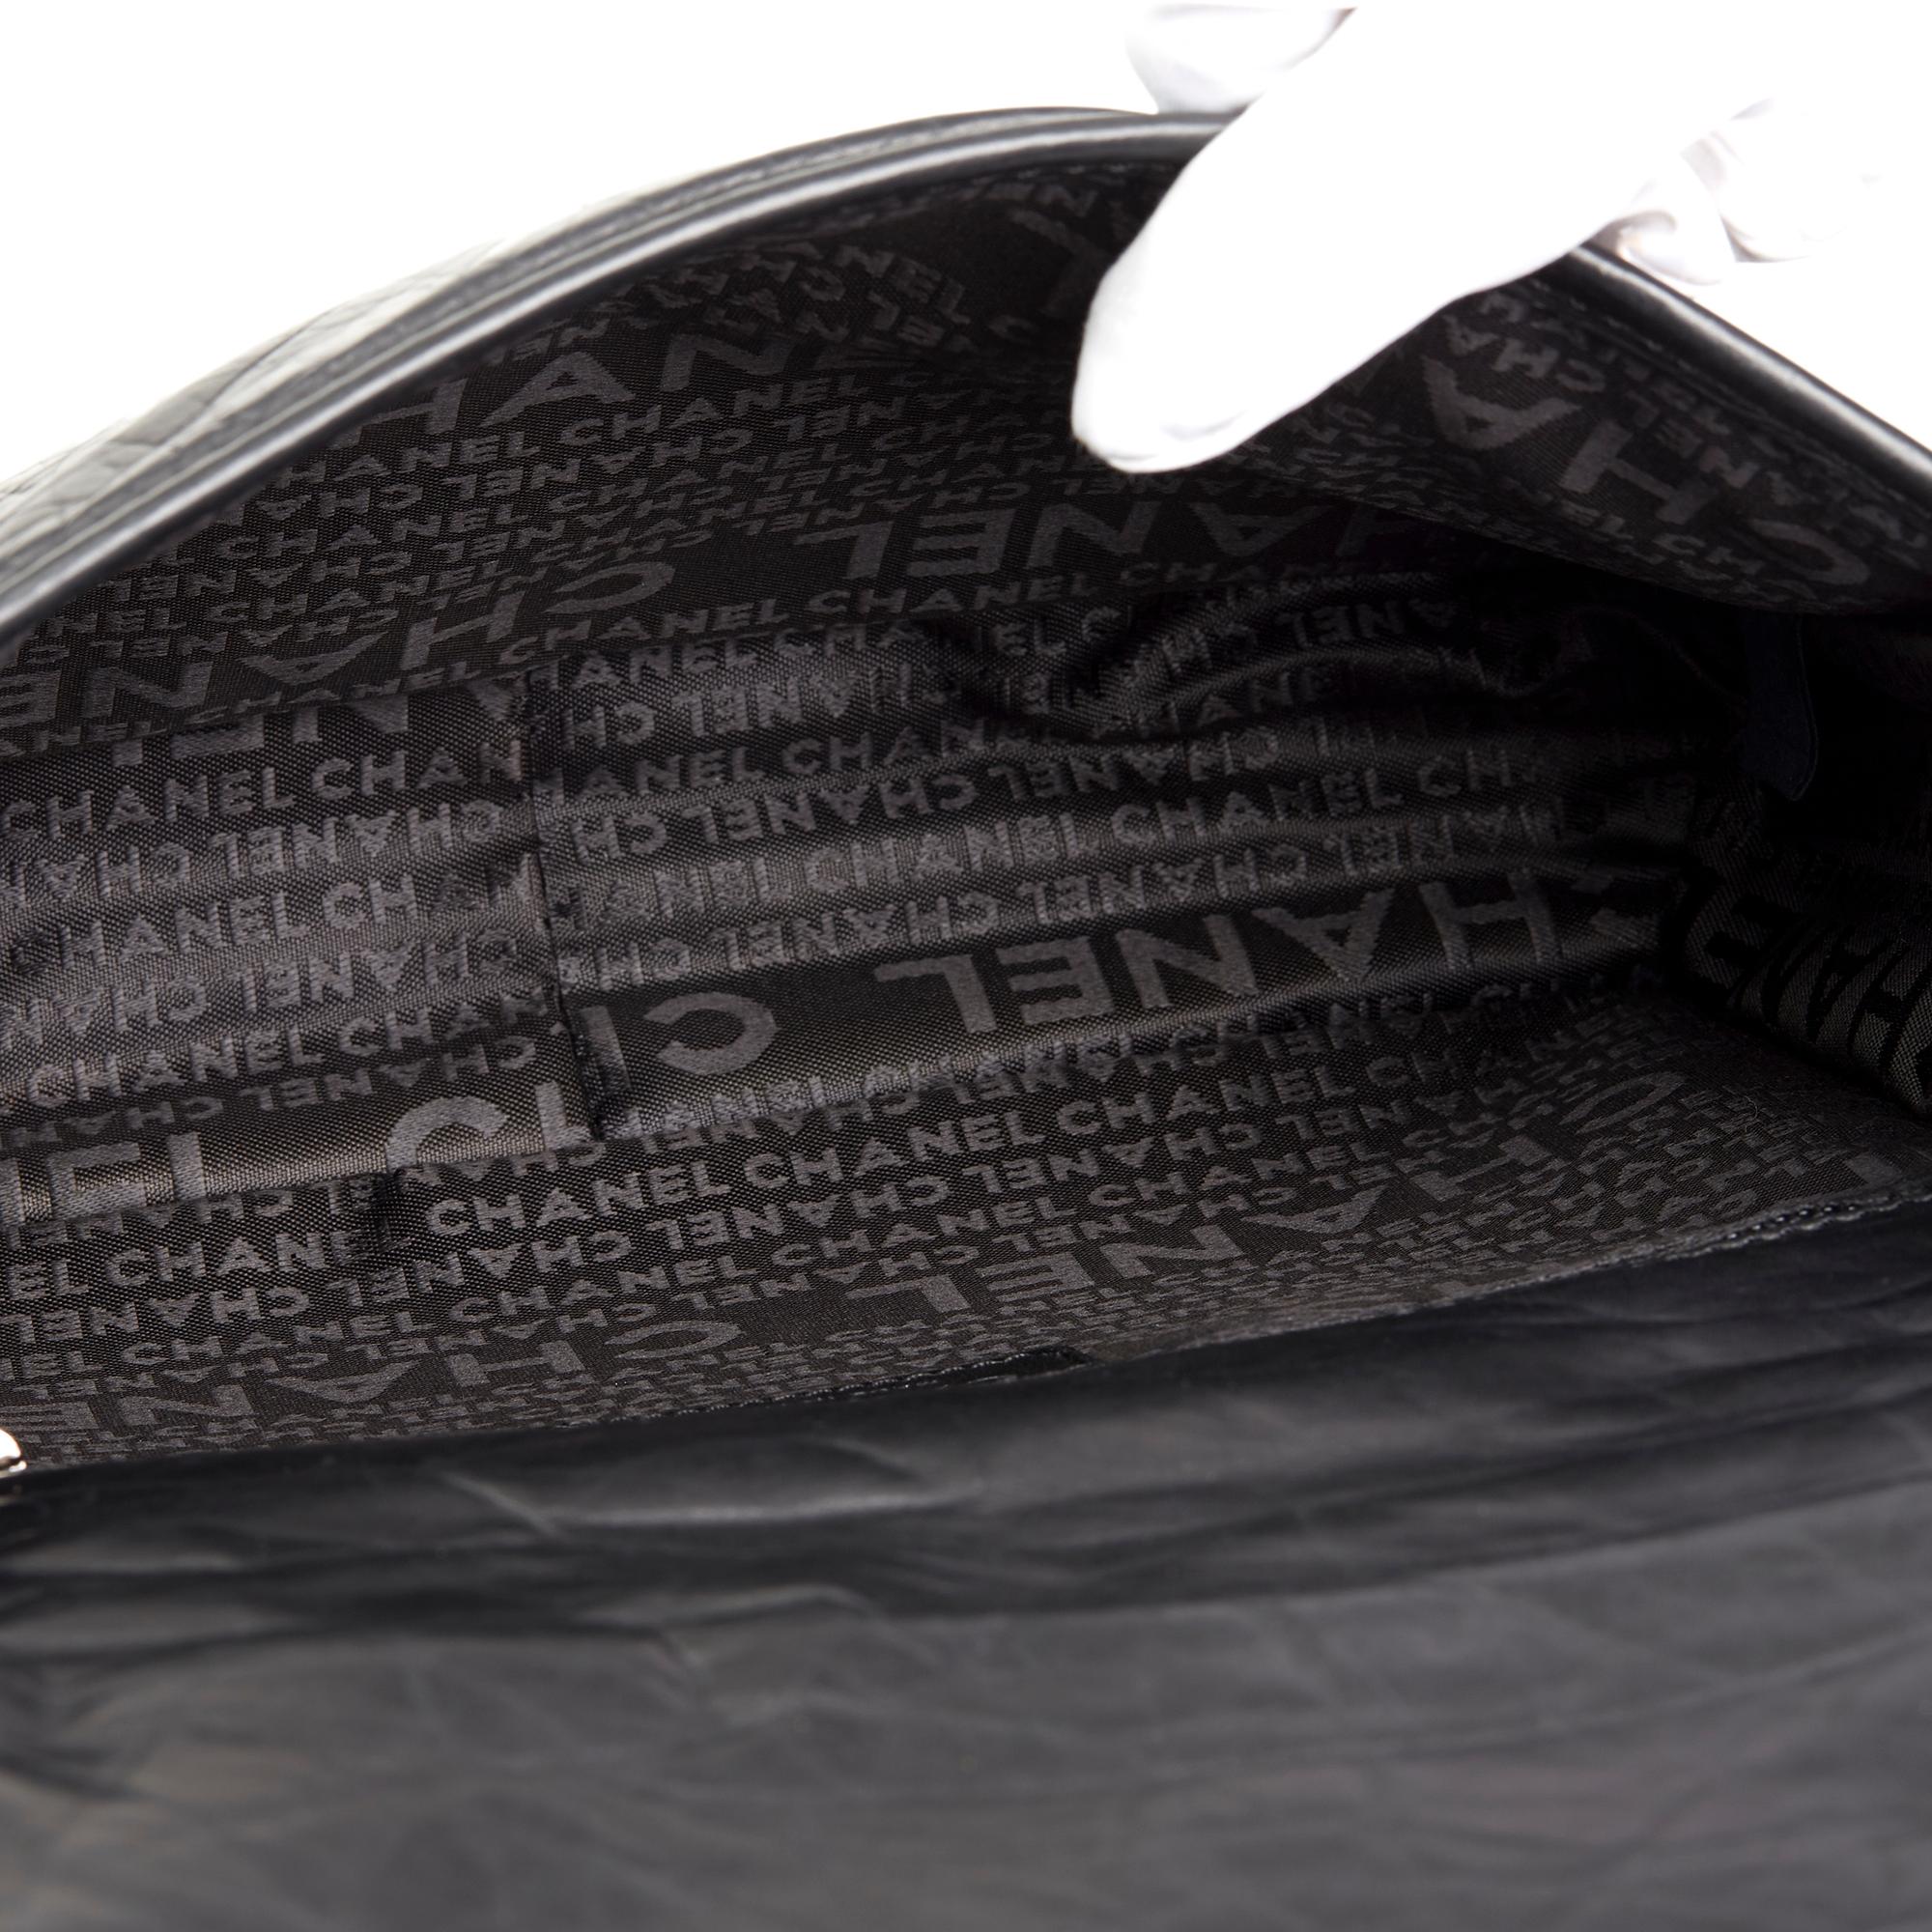 2005 Chanel Black Quilted Aged Calfskin Leather Timeless Messenger Flap Bag 6